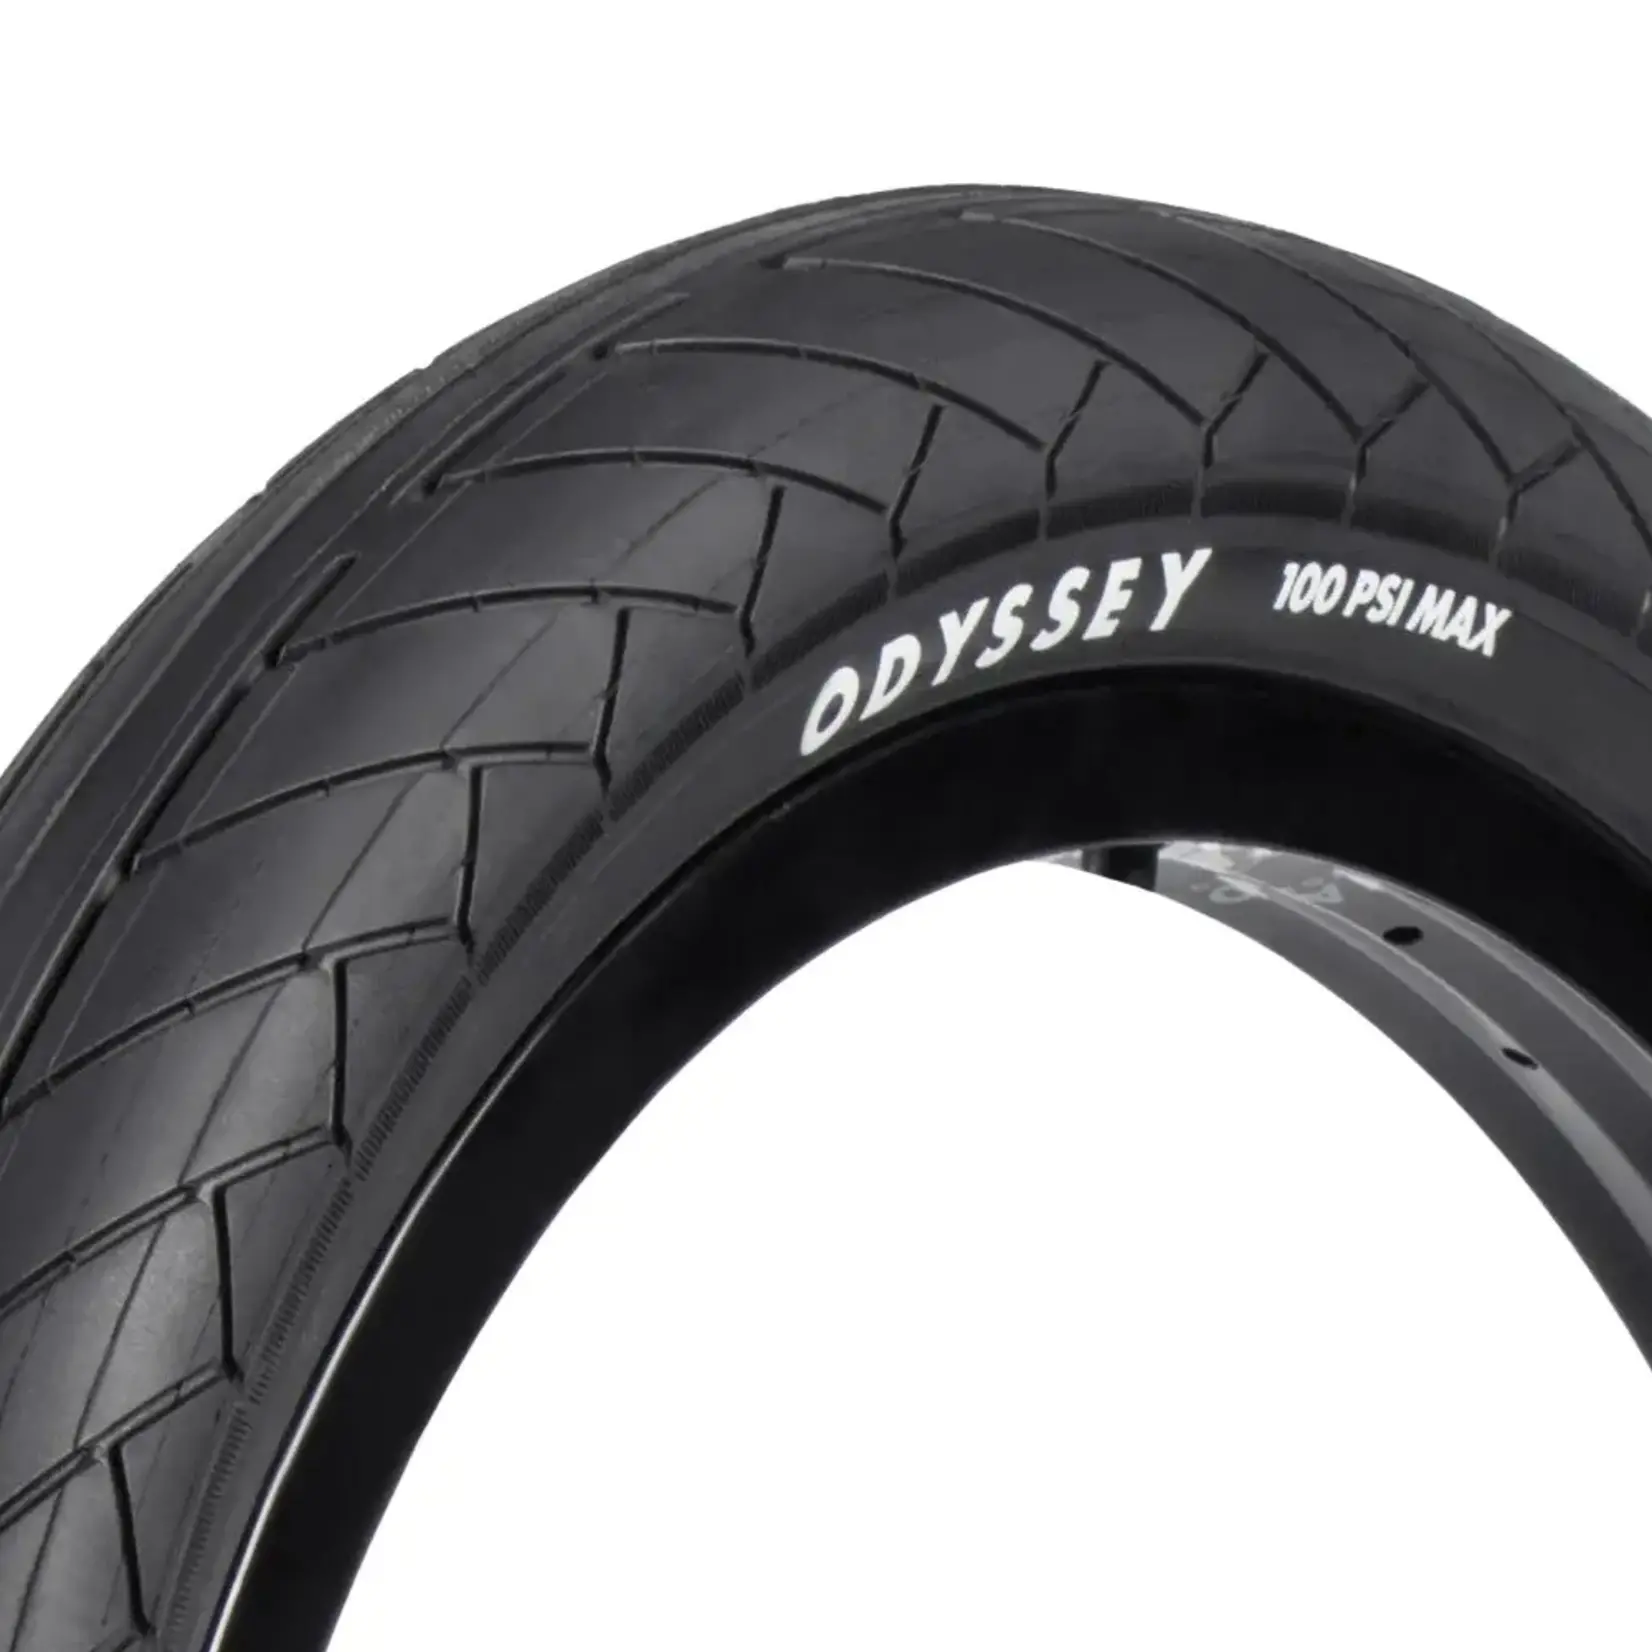 Odyssey Odyssey Tom Dugan Signature Tire - 20 x 2.4, Clincher, Wire, Black